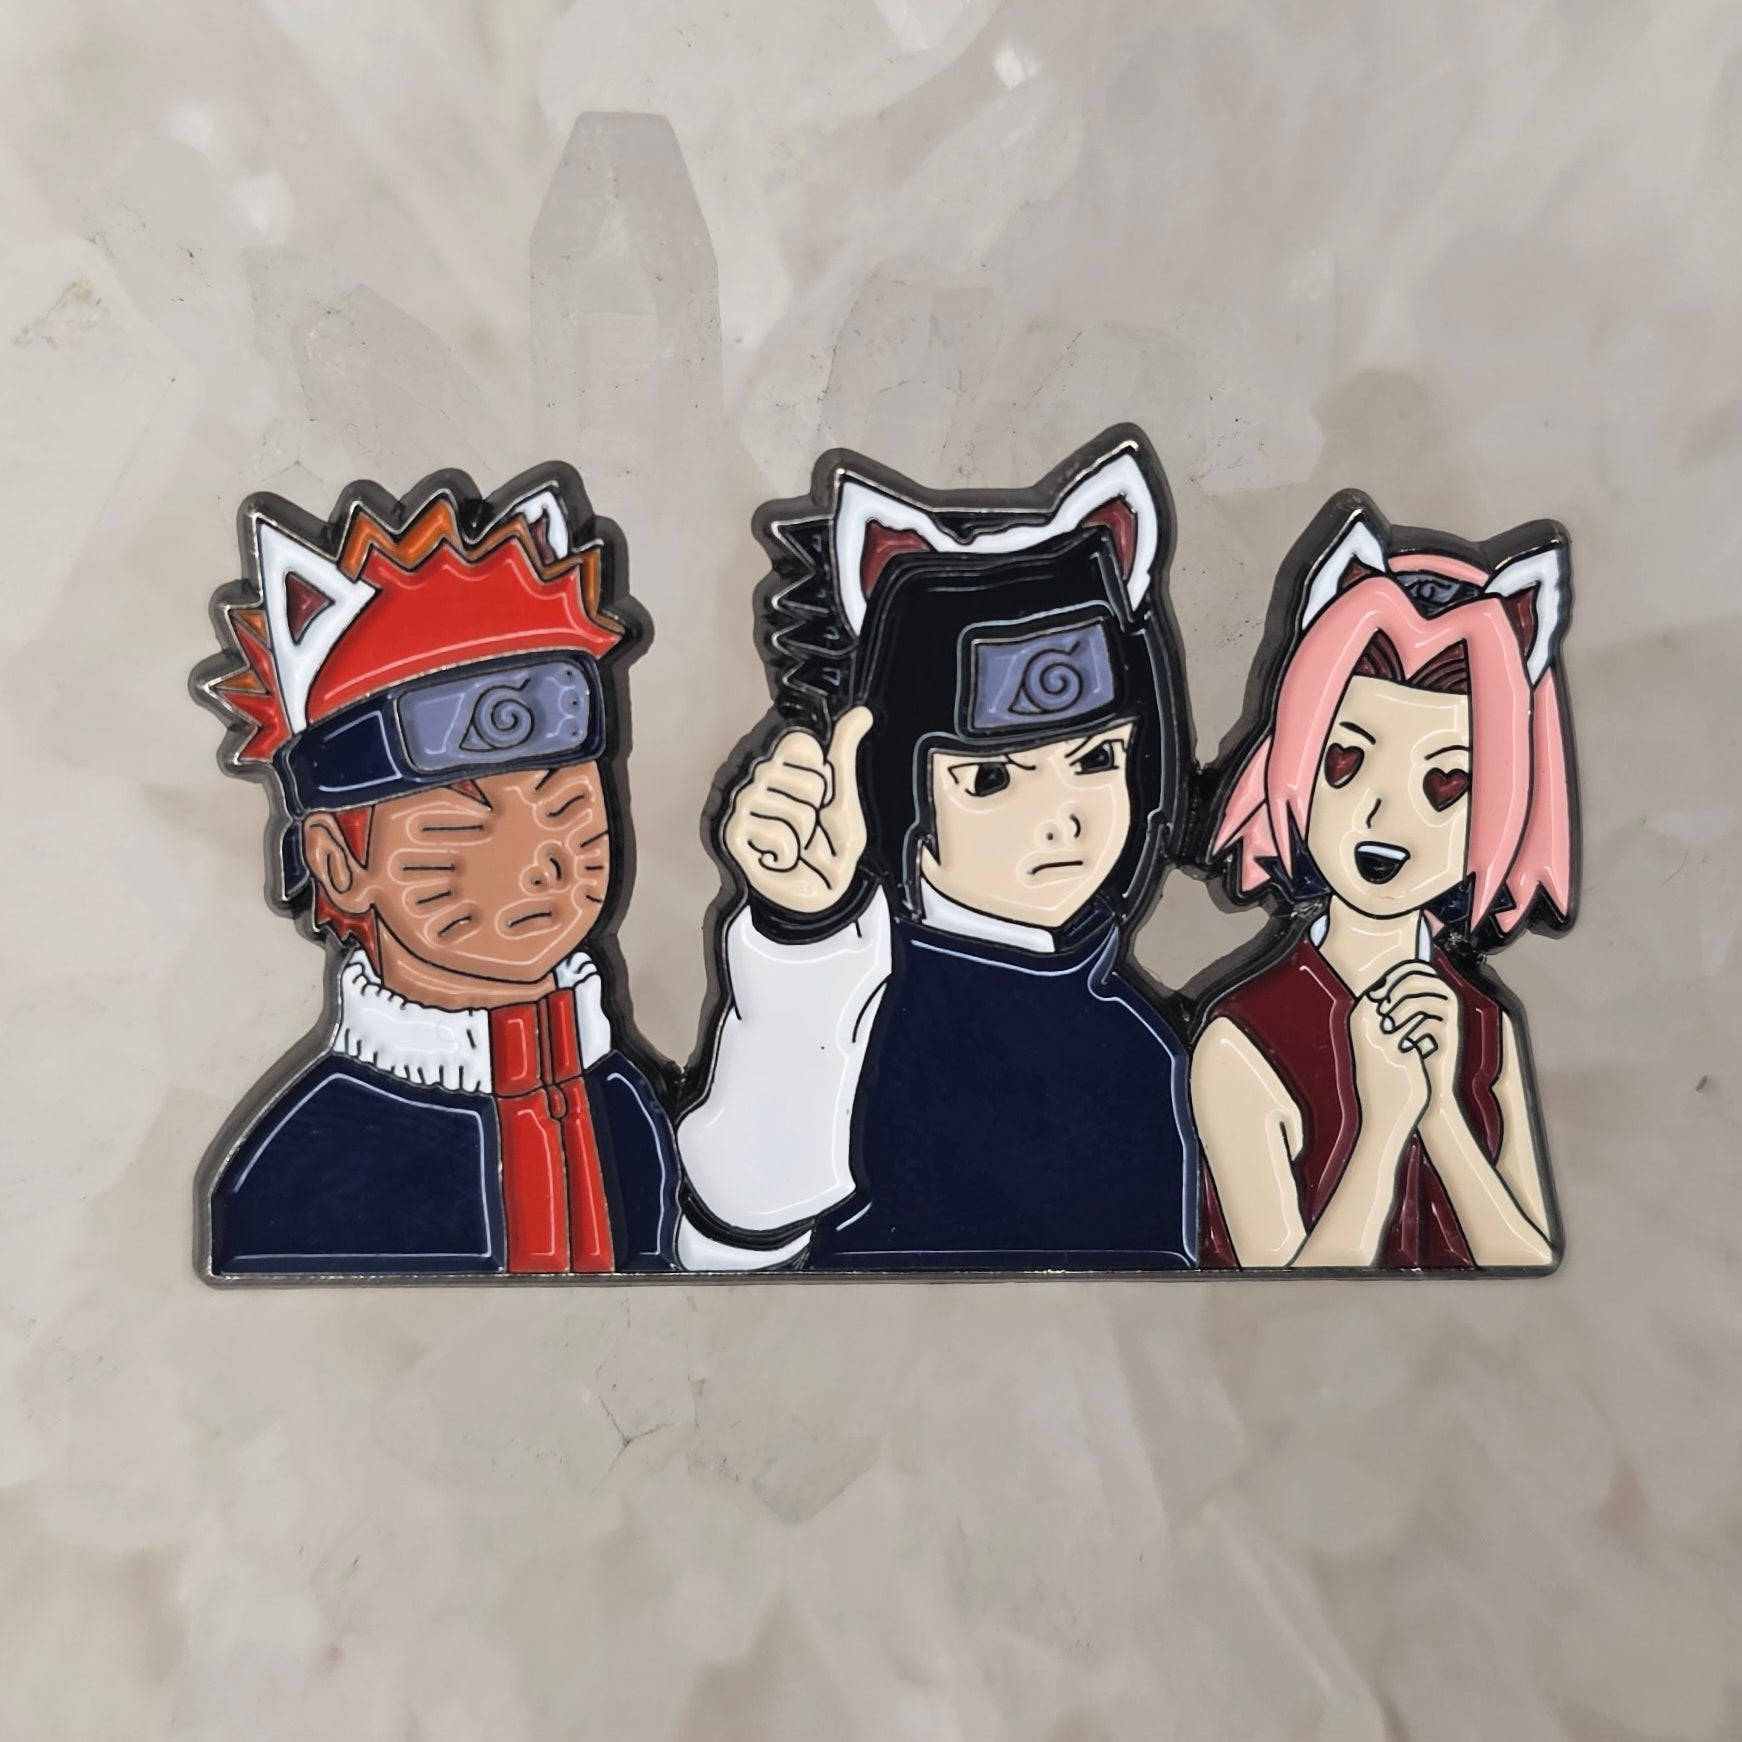 NarCrewdo Anime Crew Manga Japanese Cartoon Video Game Enamel Pins Hat Pins Lapel Pin Brooch Badge Festival Pin